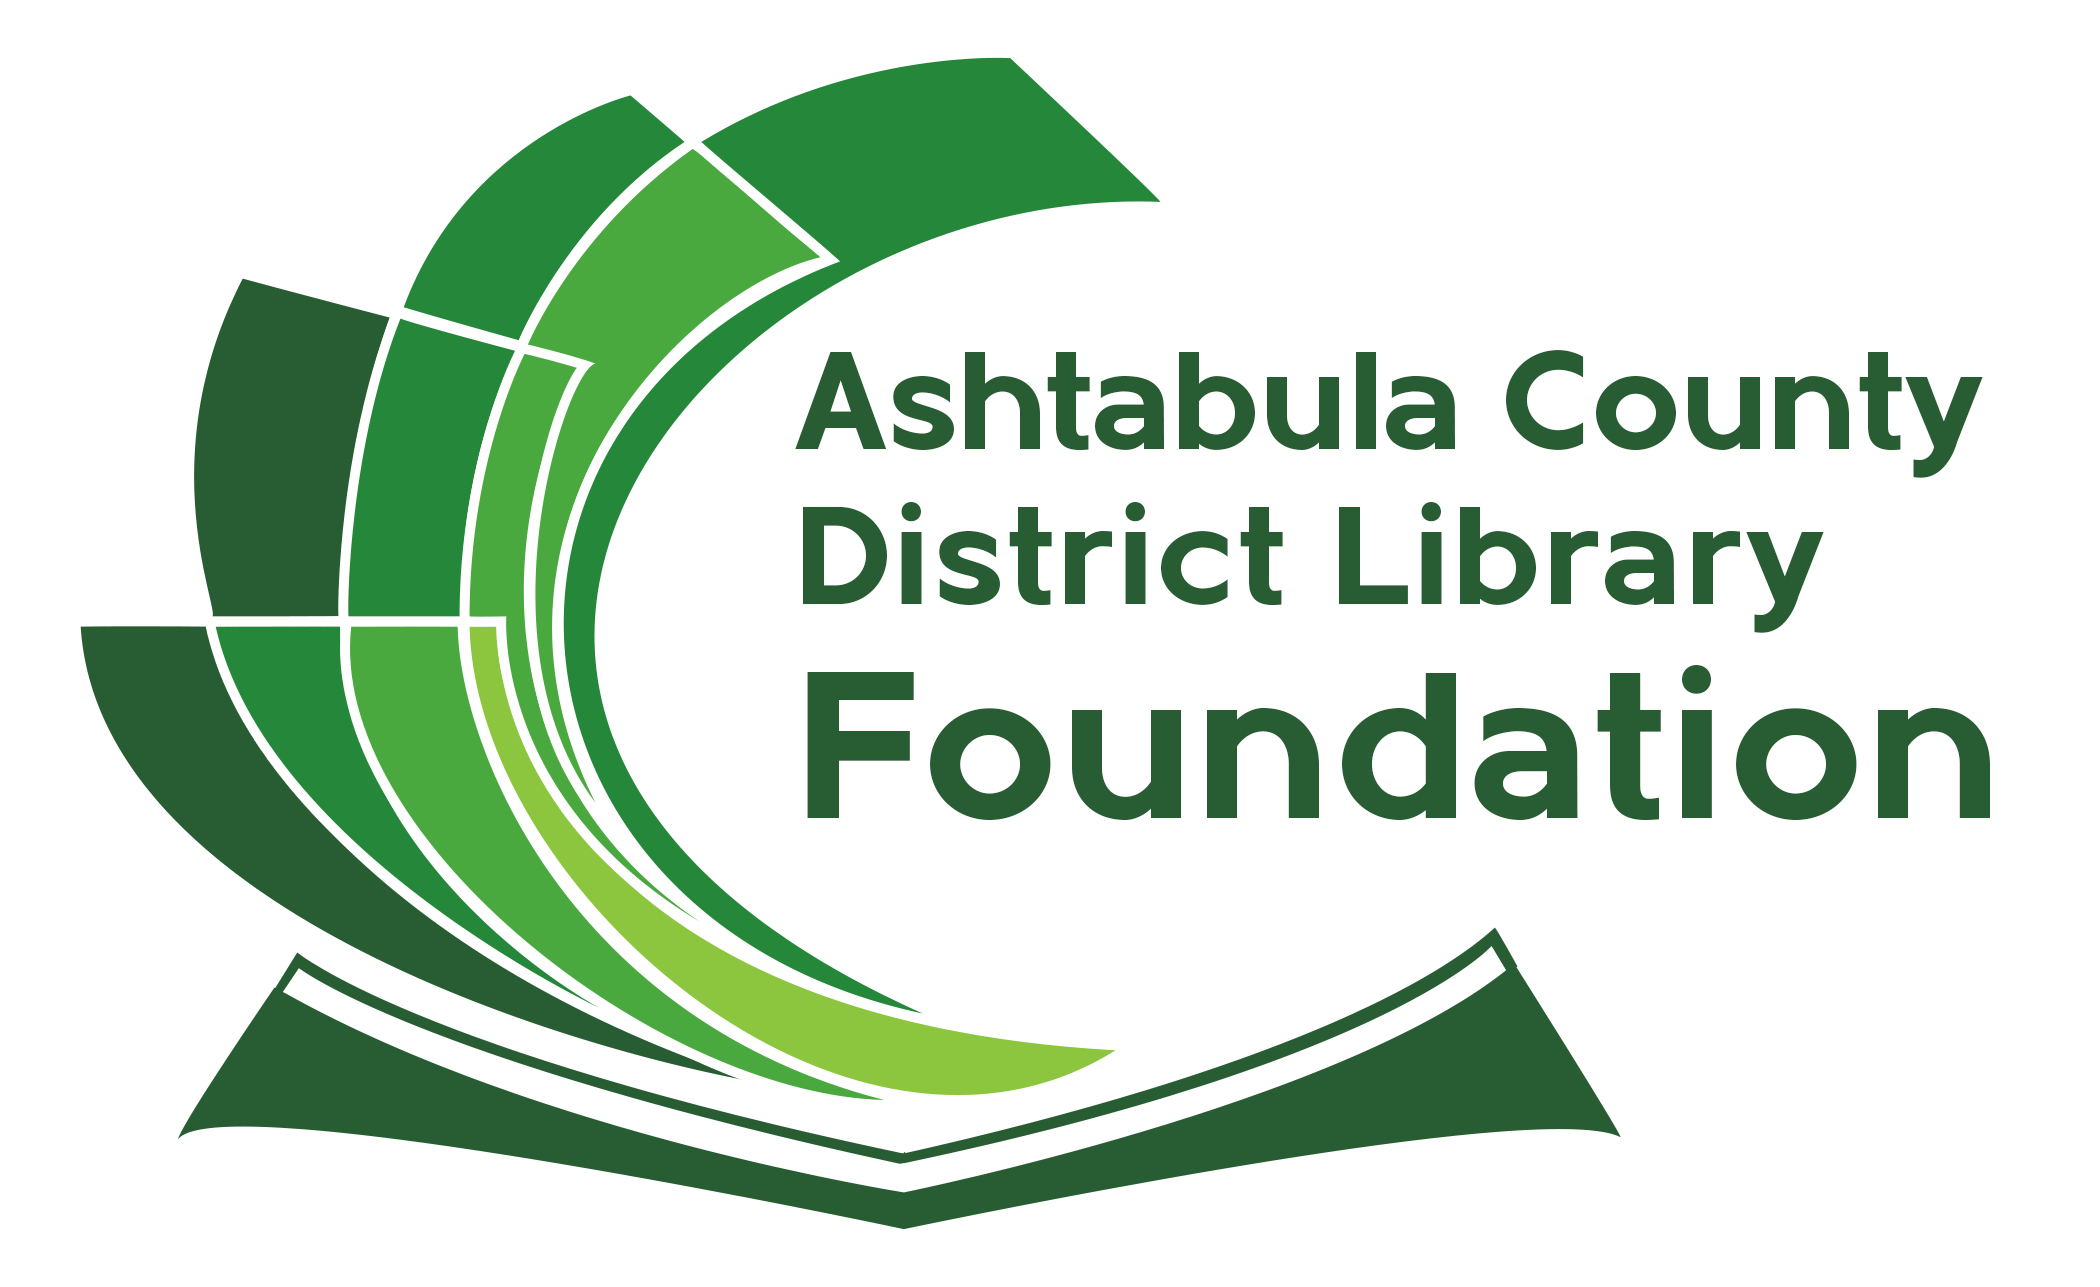 The Ashtabula County District Library Foundation logo